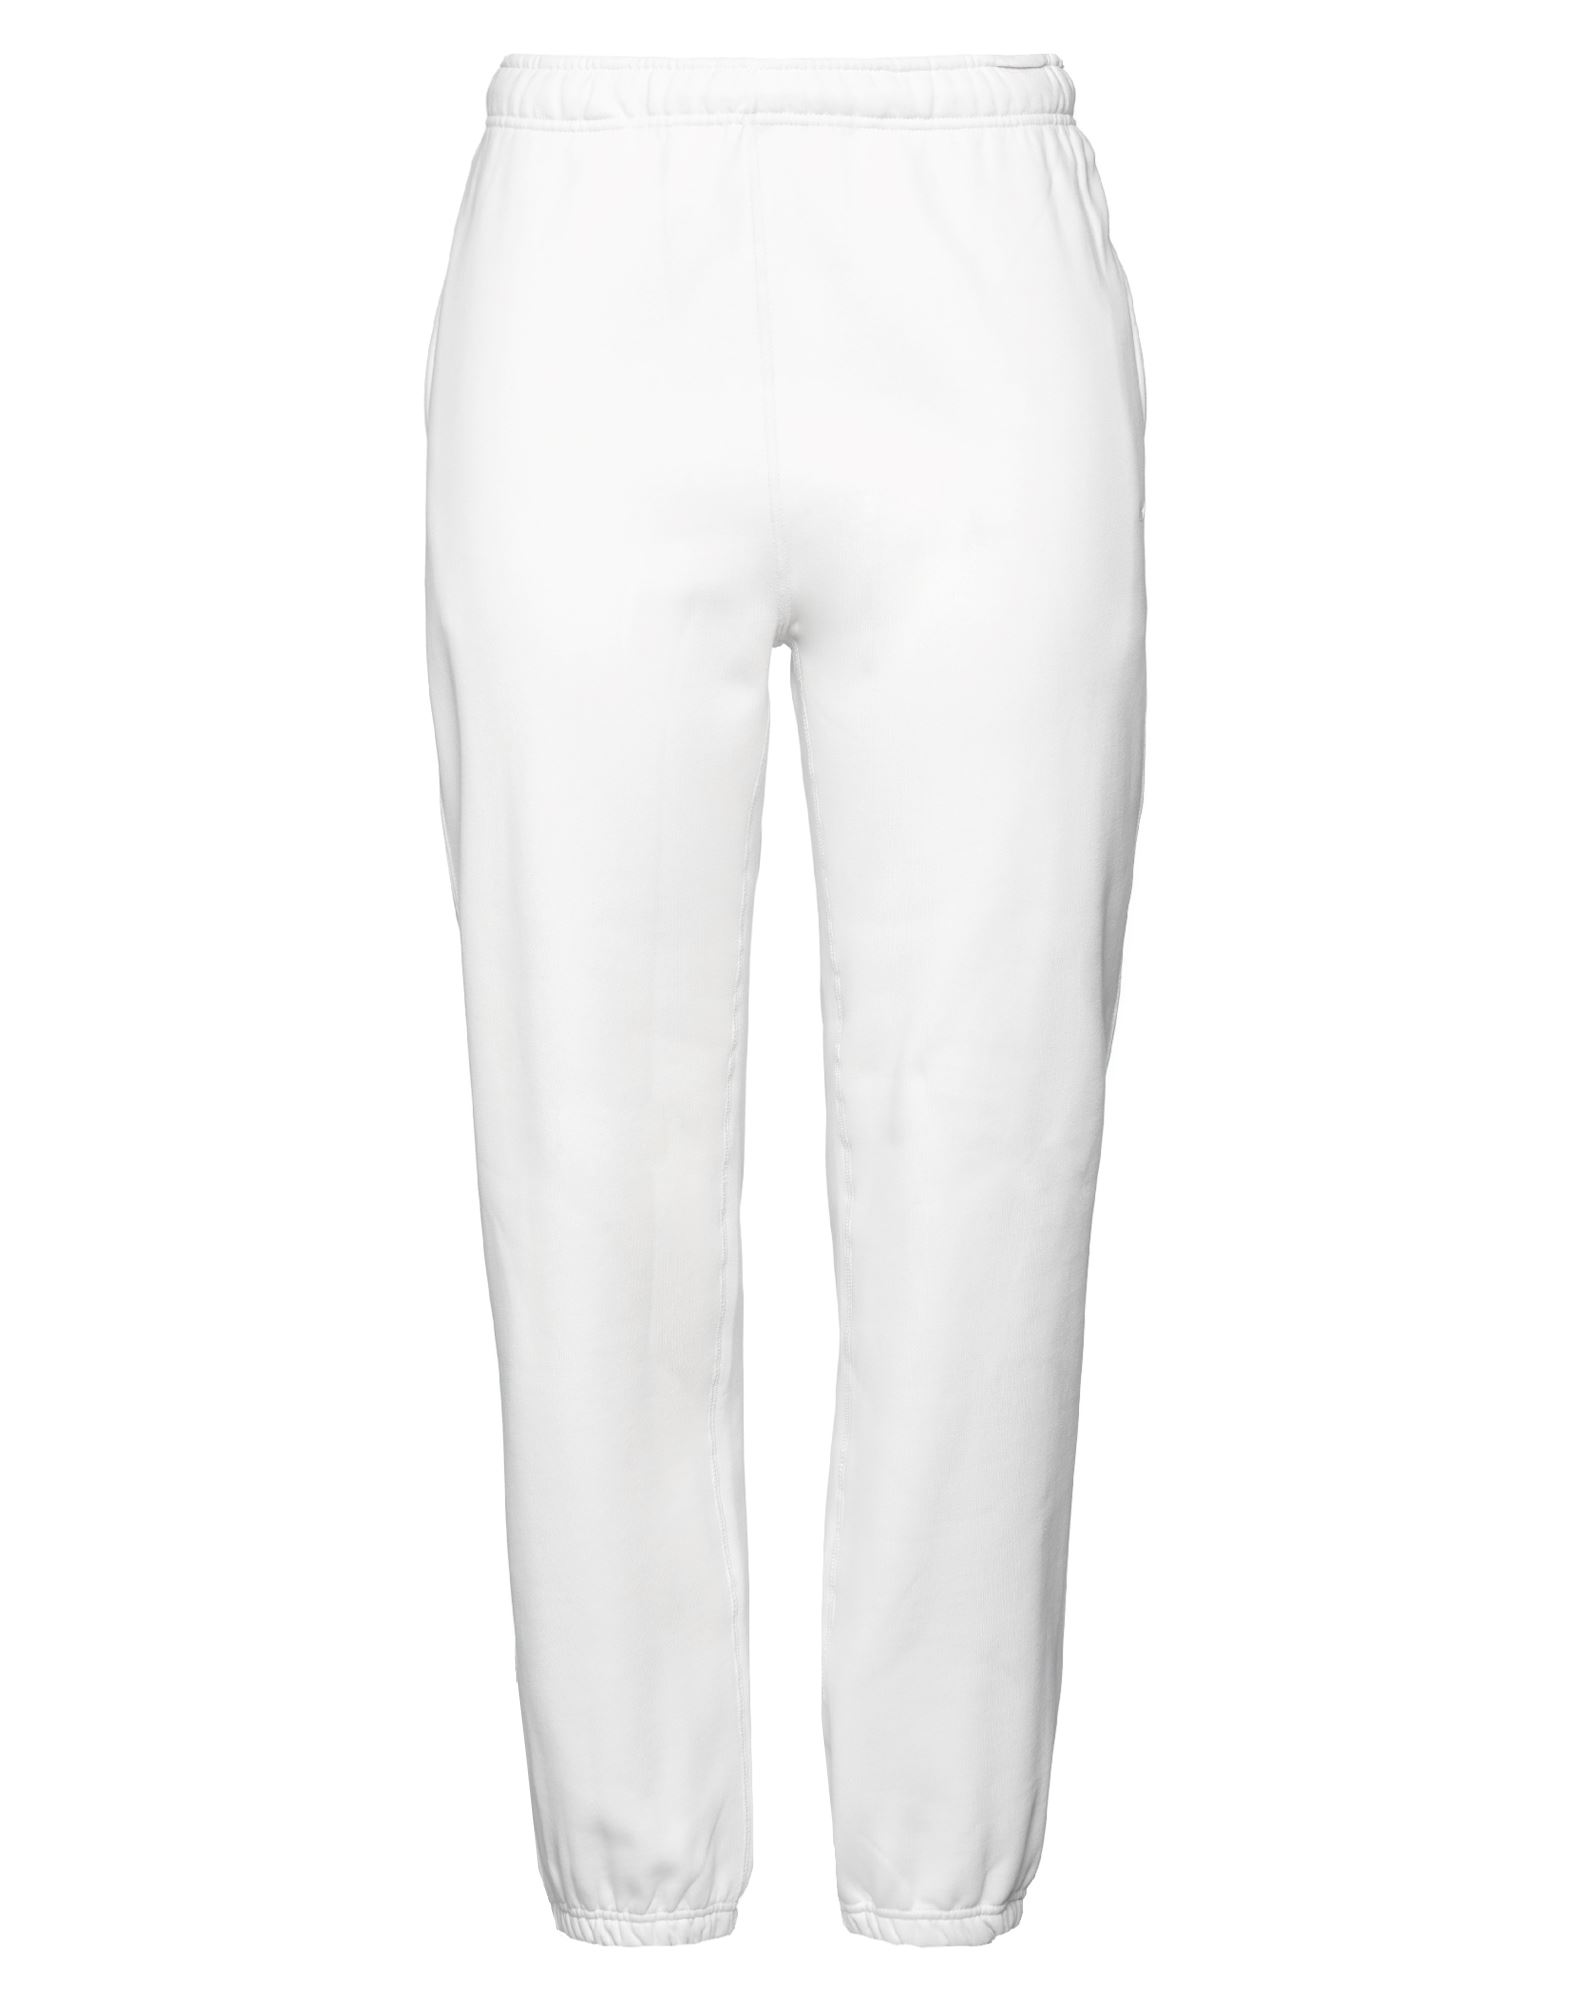 Nike Pants In White